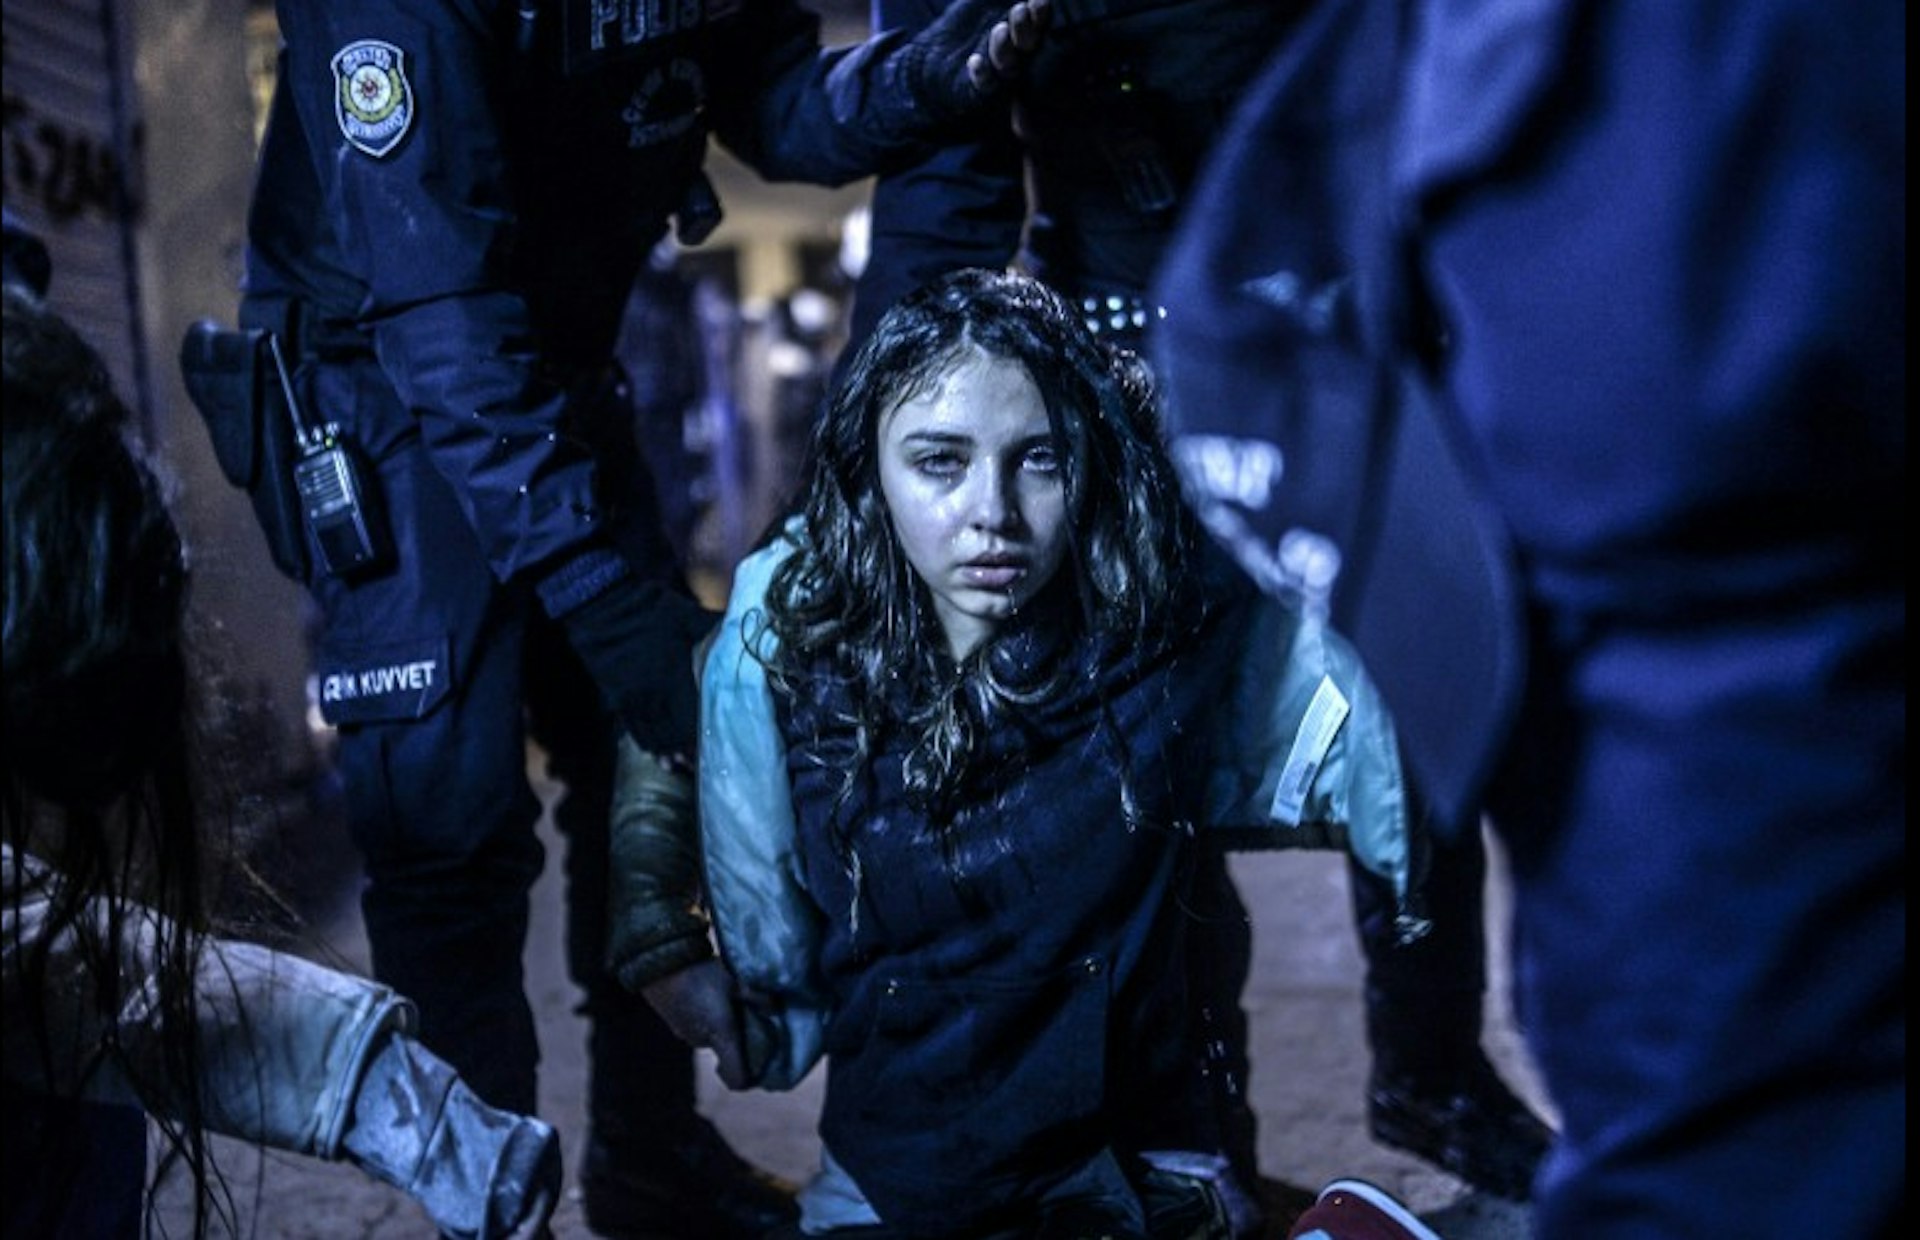 Bulent Kilic - Istanbul Protests 